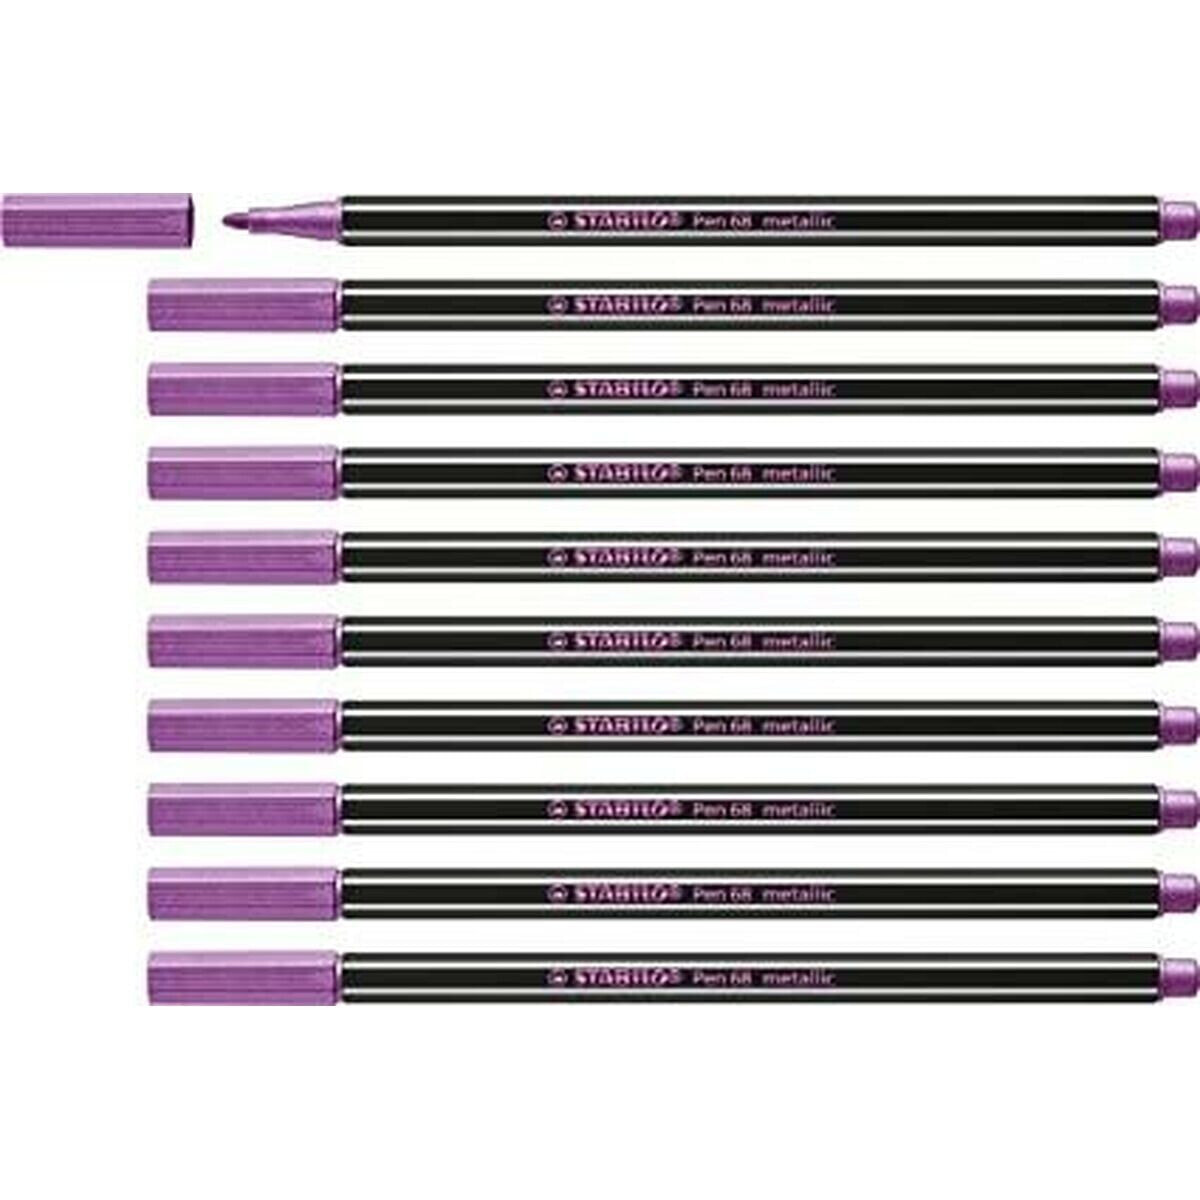 STABILO Pen 68 metallic фломастер Средний Розовый металлик 1 шт 68/856